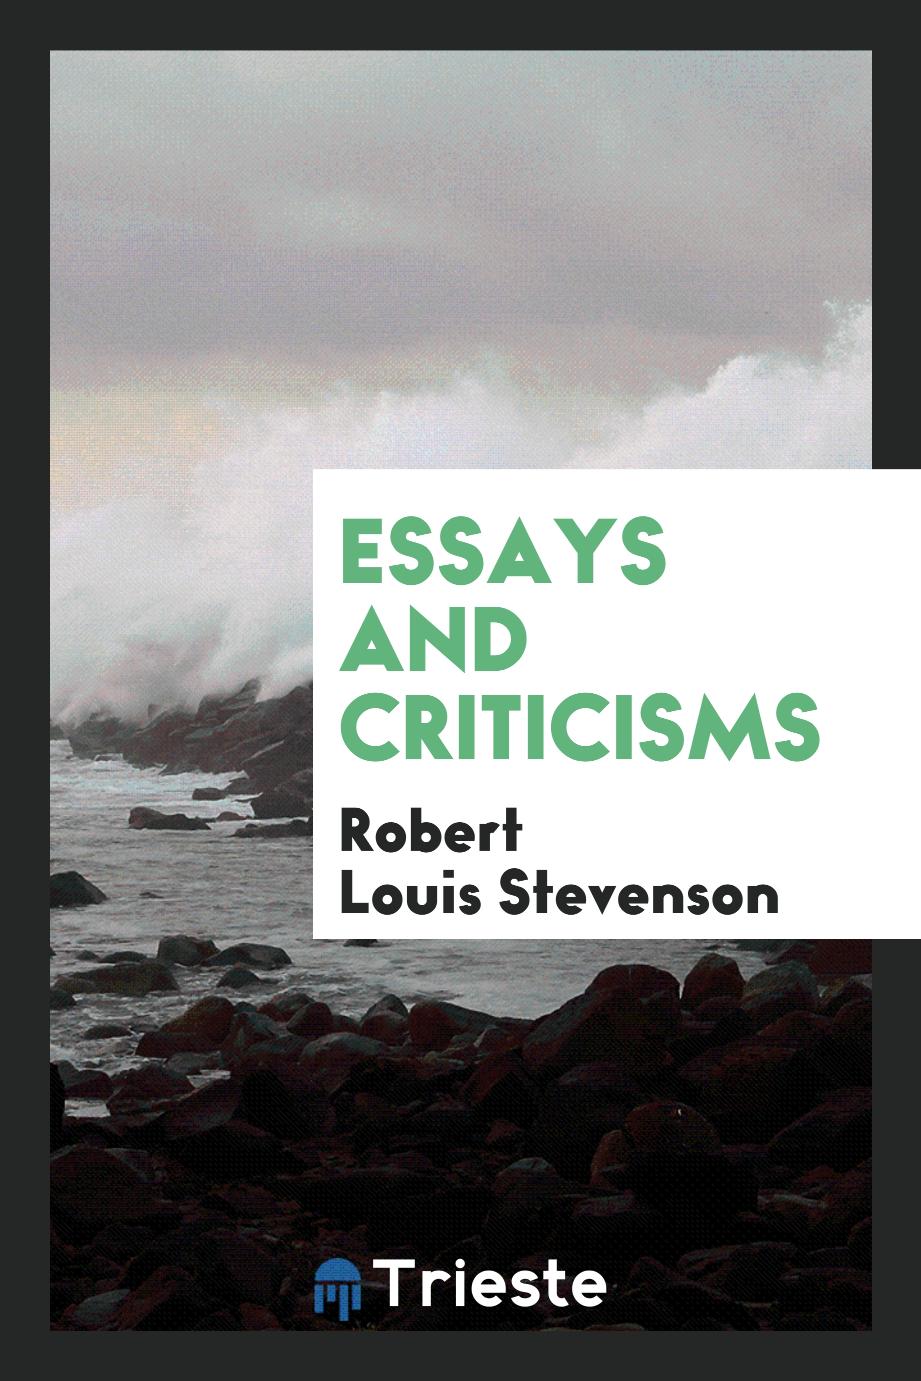 Robert Louis Stevenson - Essays and Criticisms